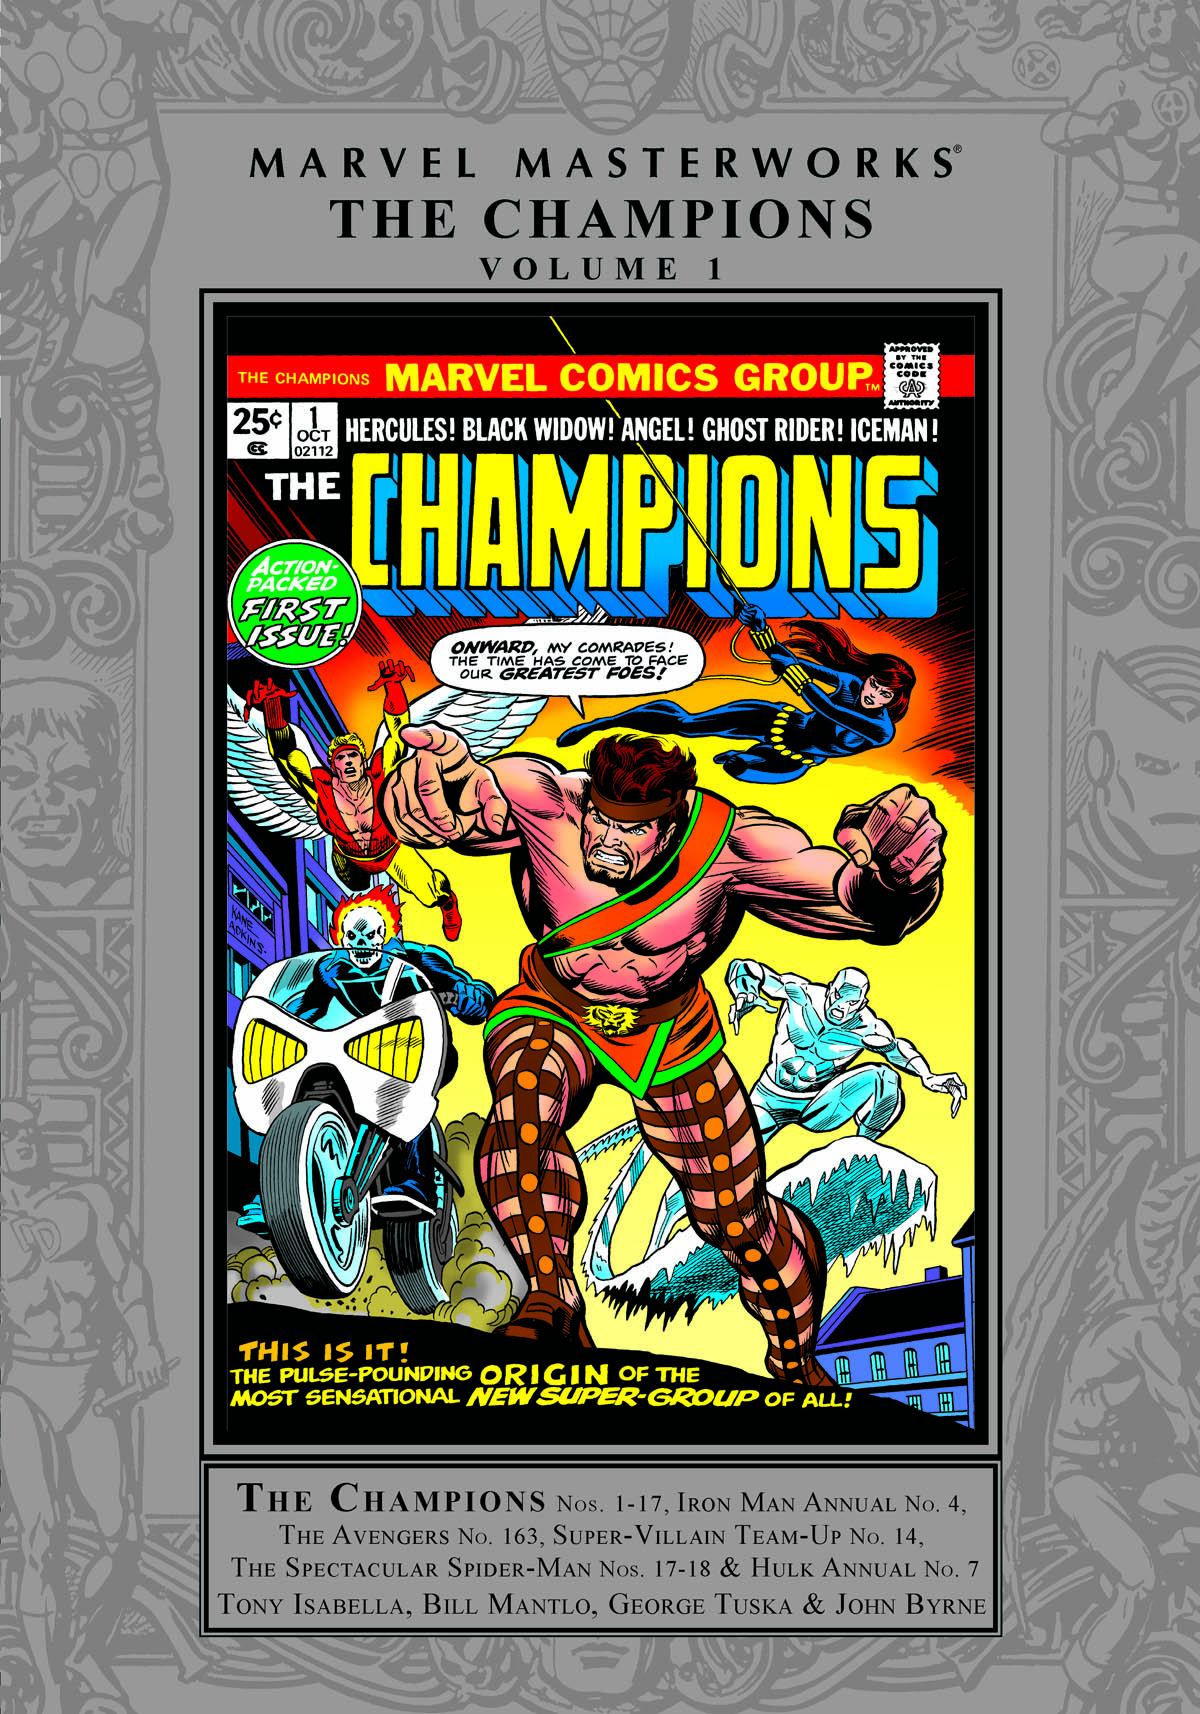 Marvel Masterworks: The Champions Vol. 1 (Trade Paperback)